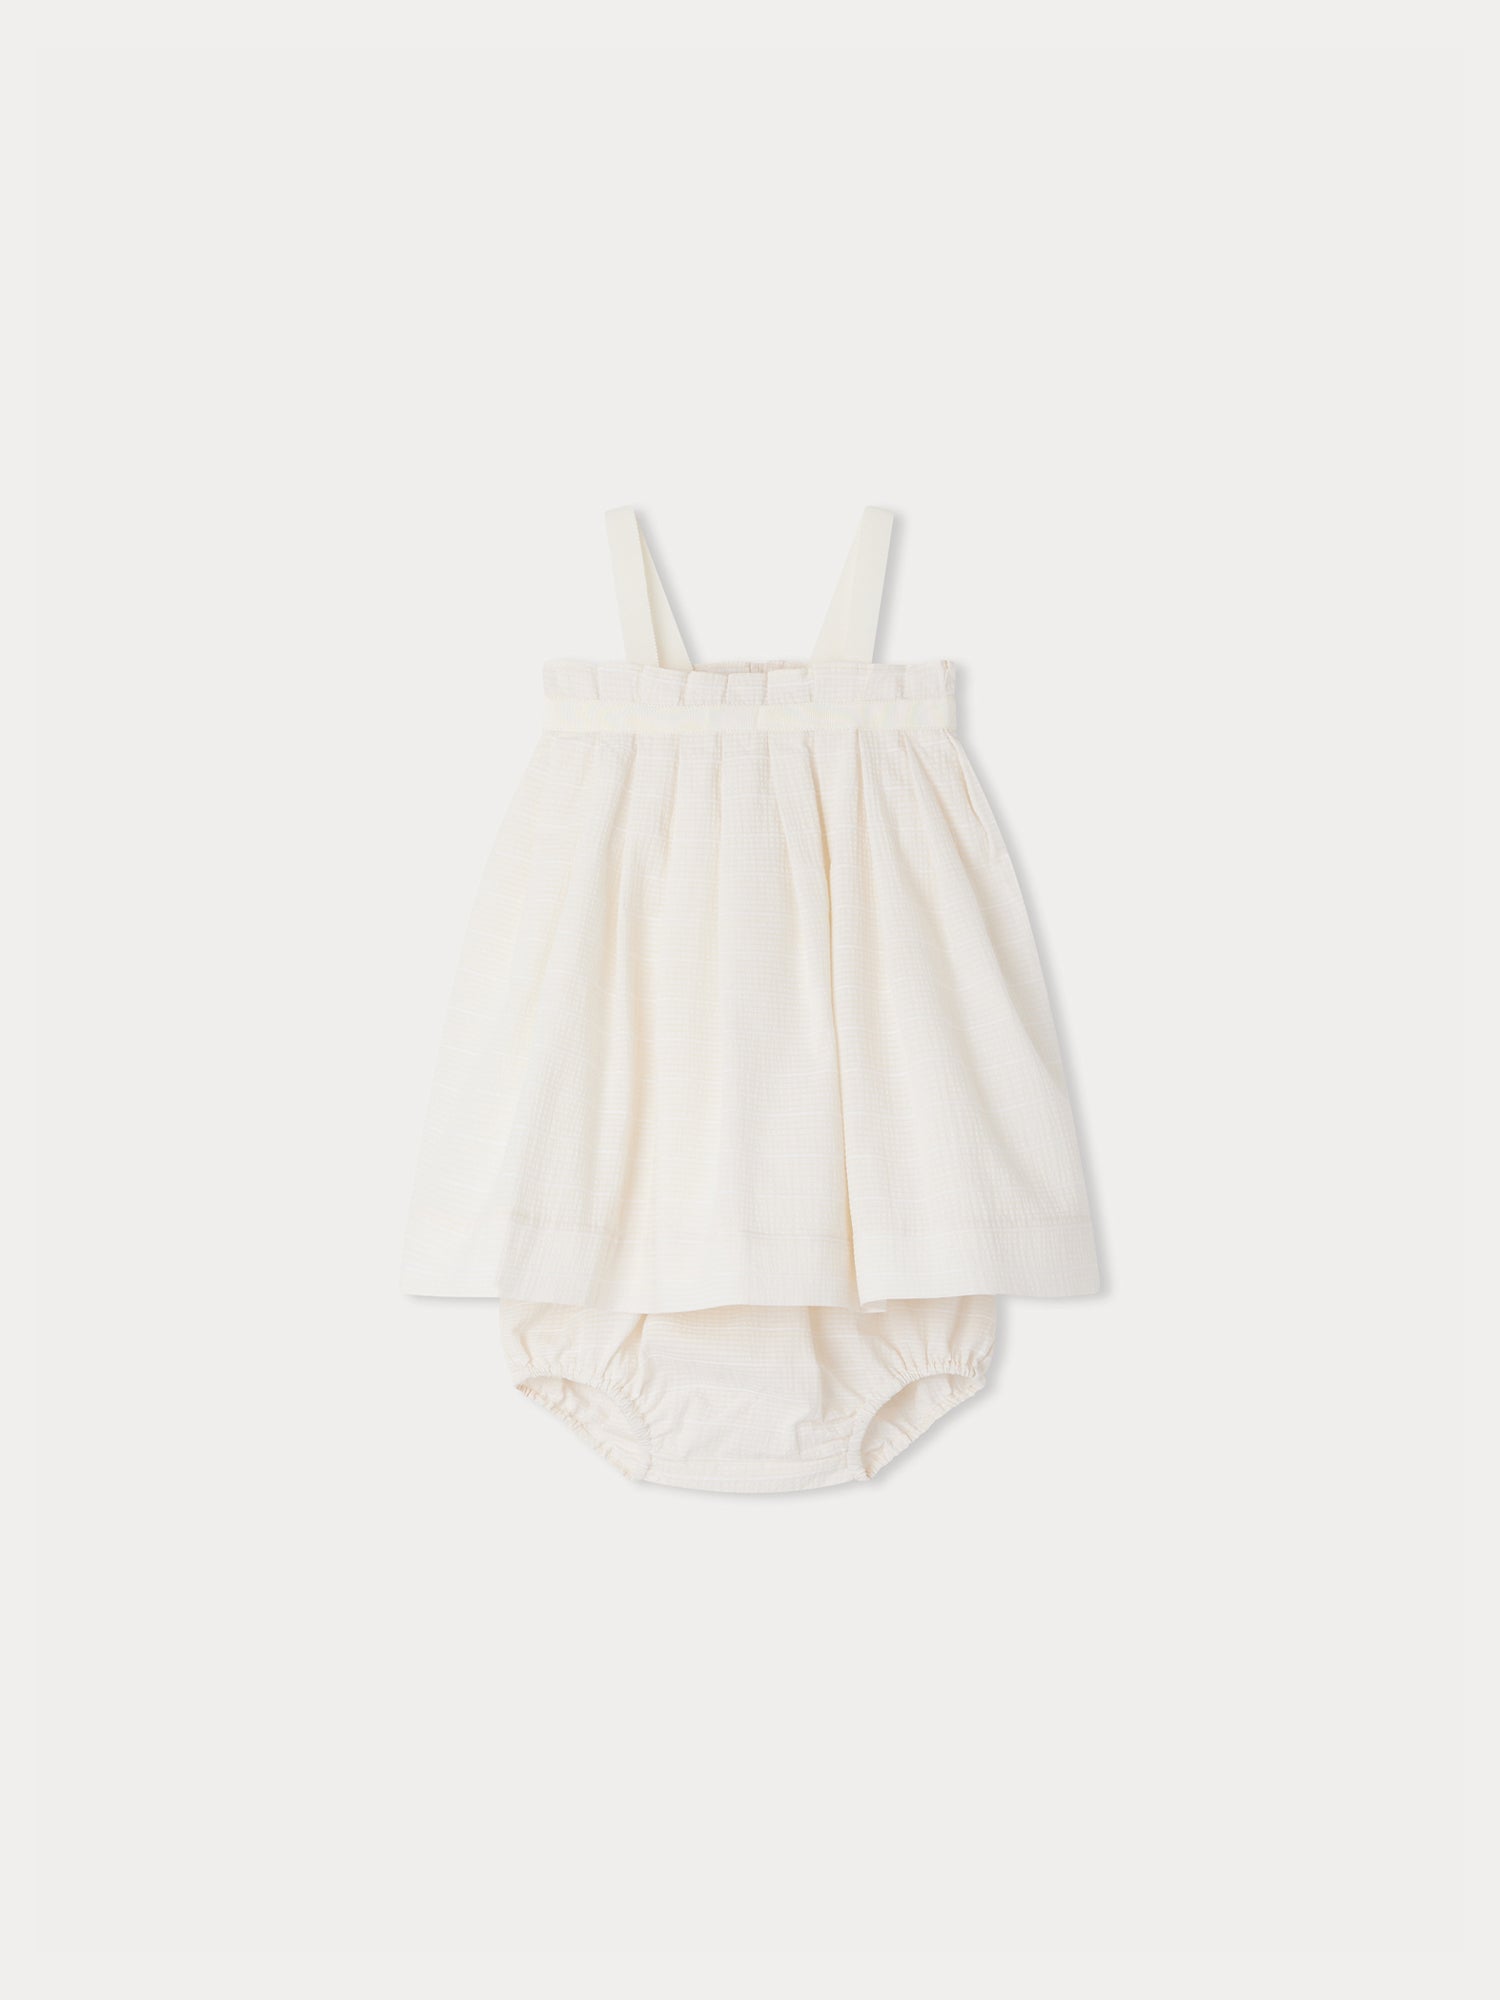 Baby Girls White Cotton Dress Set